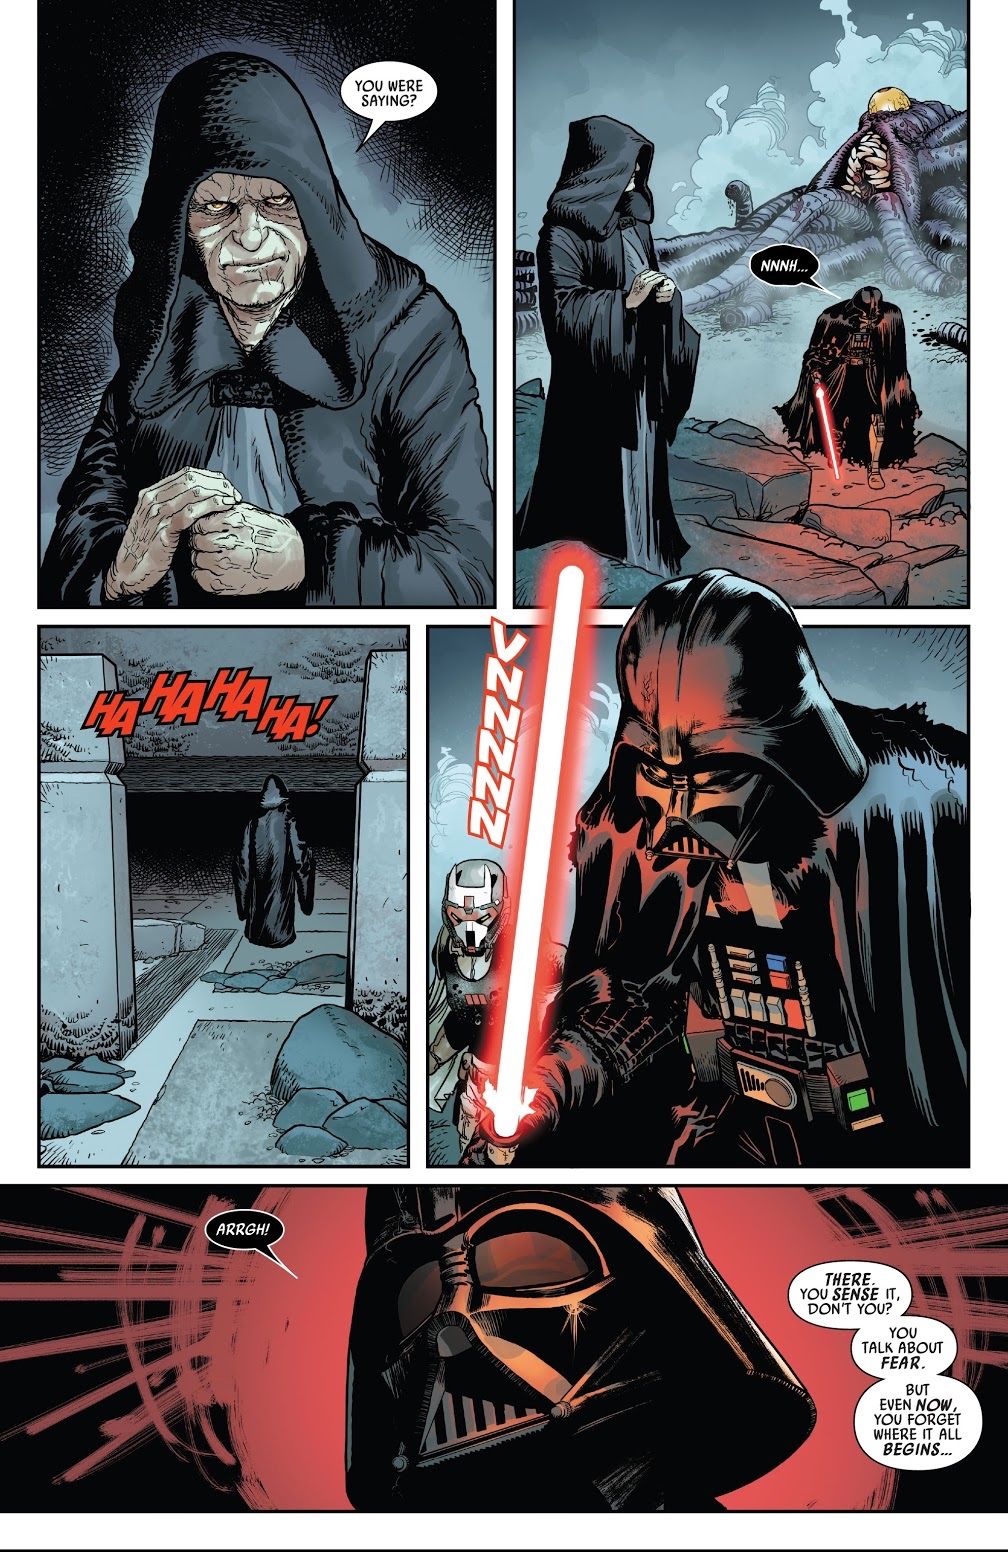 Darth-Vader-11-Defeated